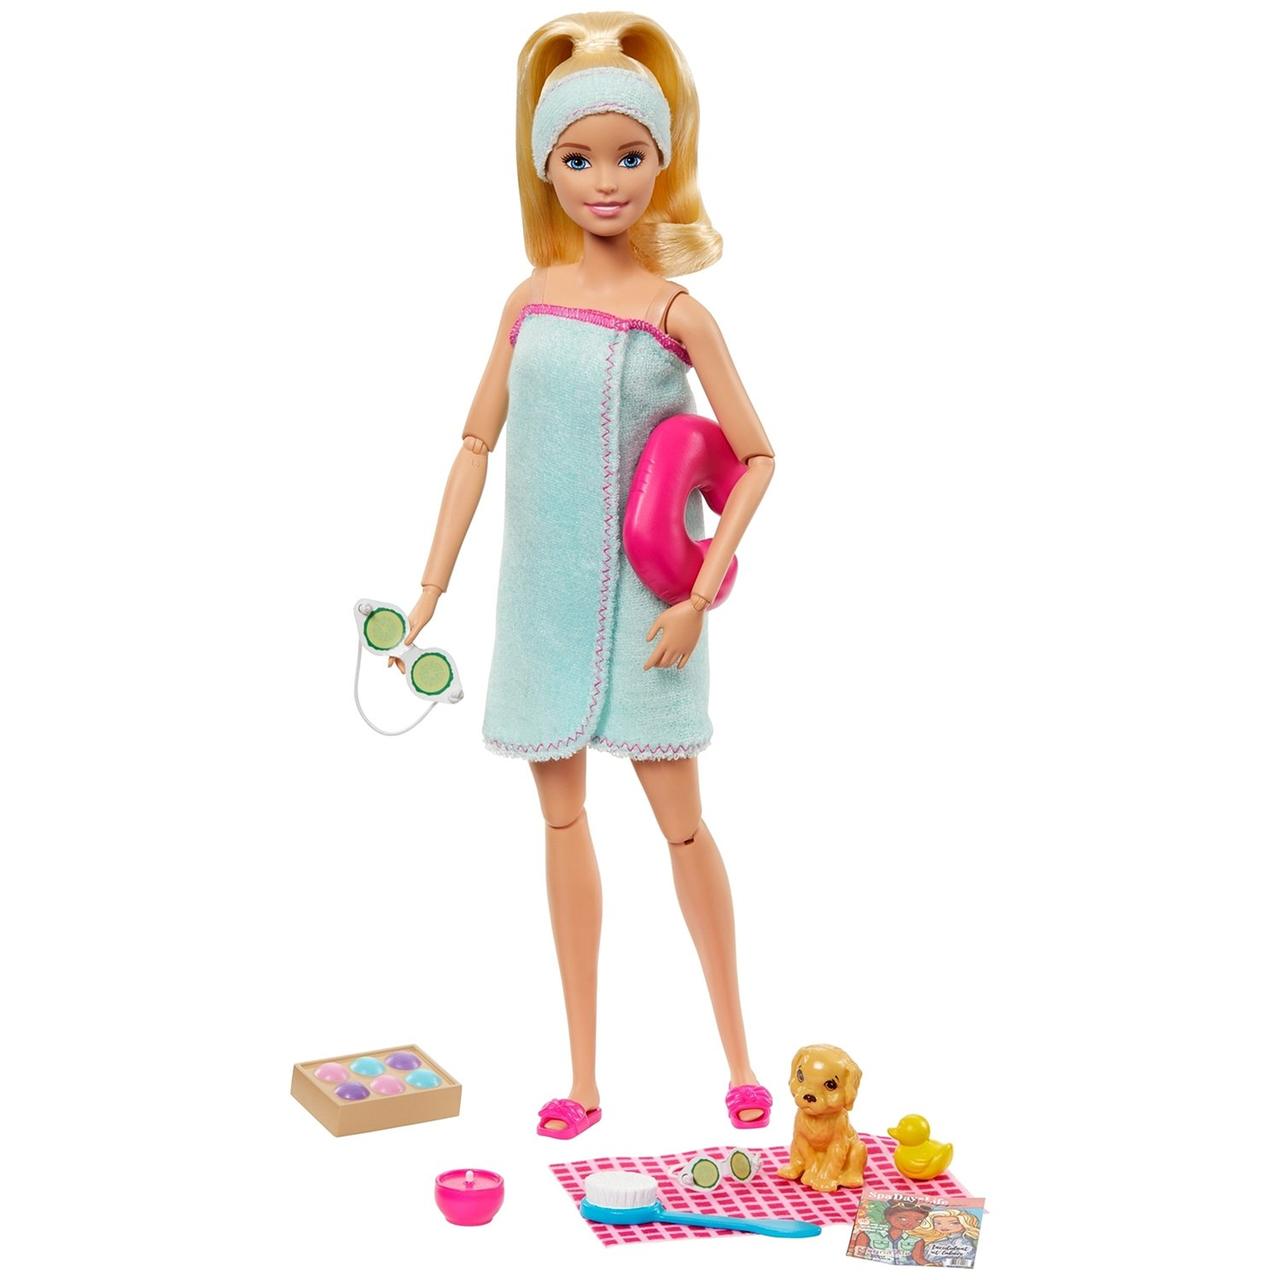 Barbie Игровой набор "Релаксация" Кукла Барби SPA-процедуры